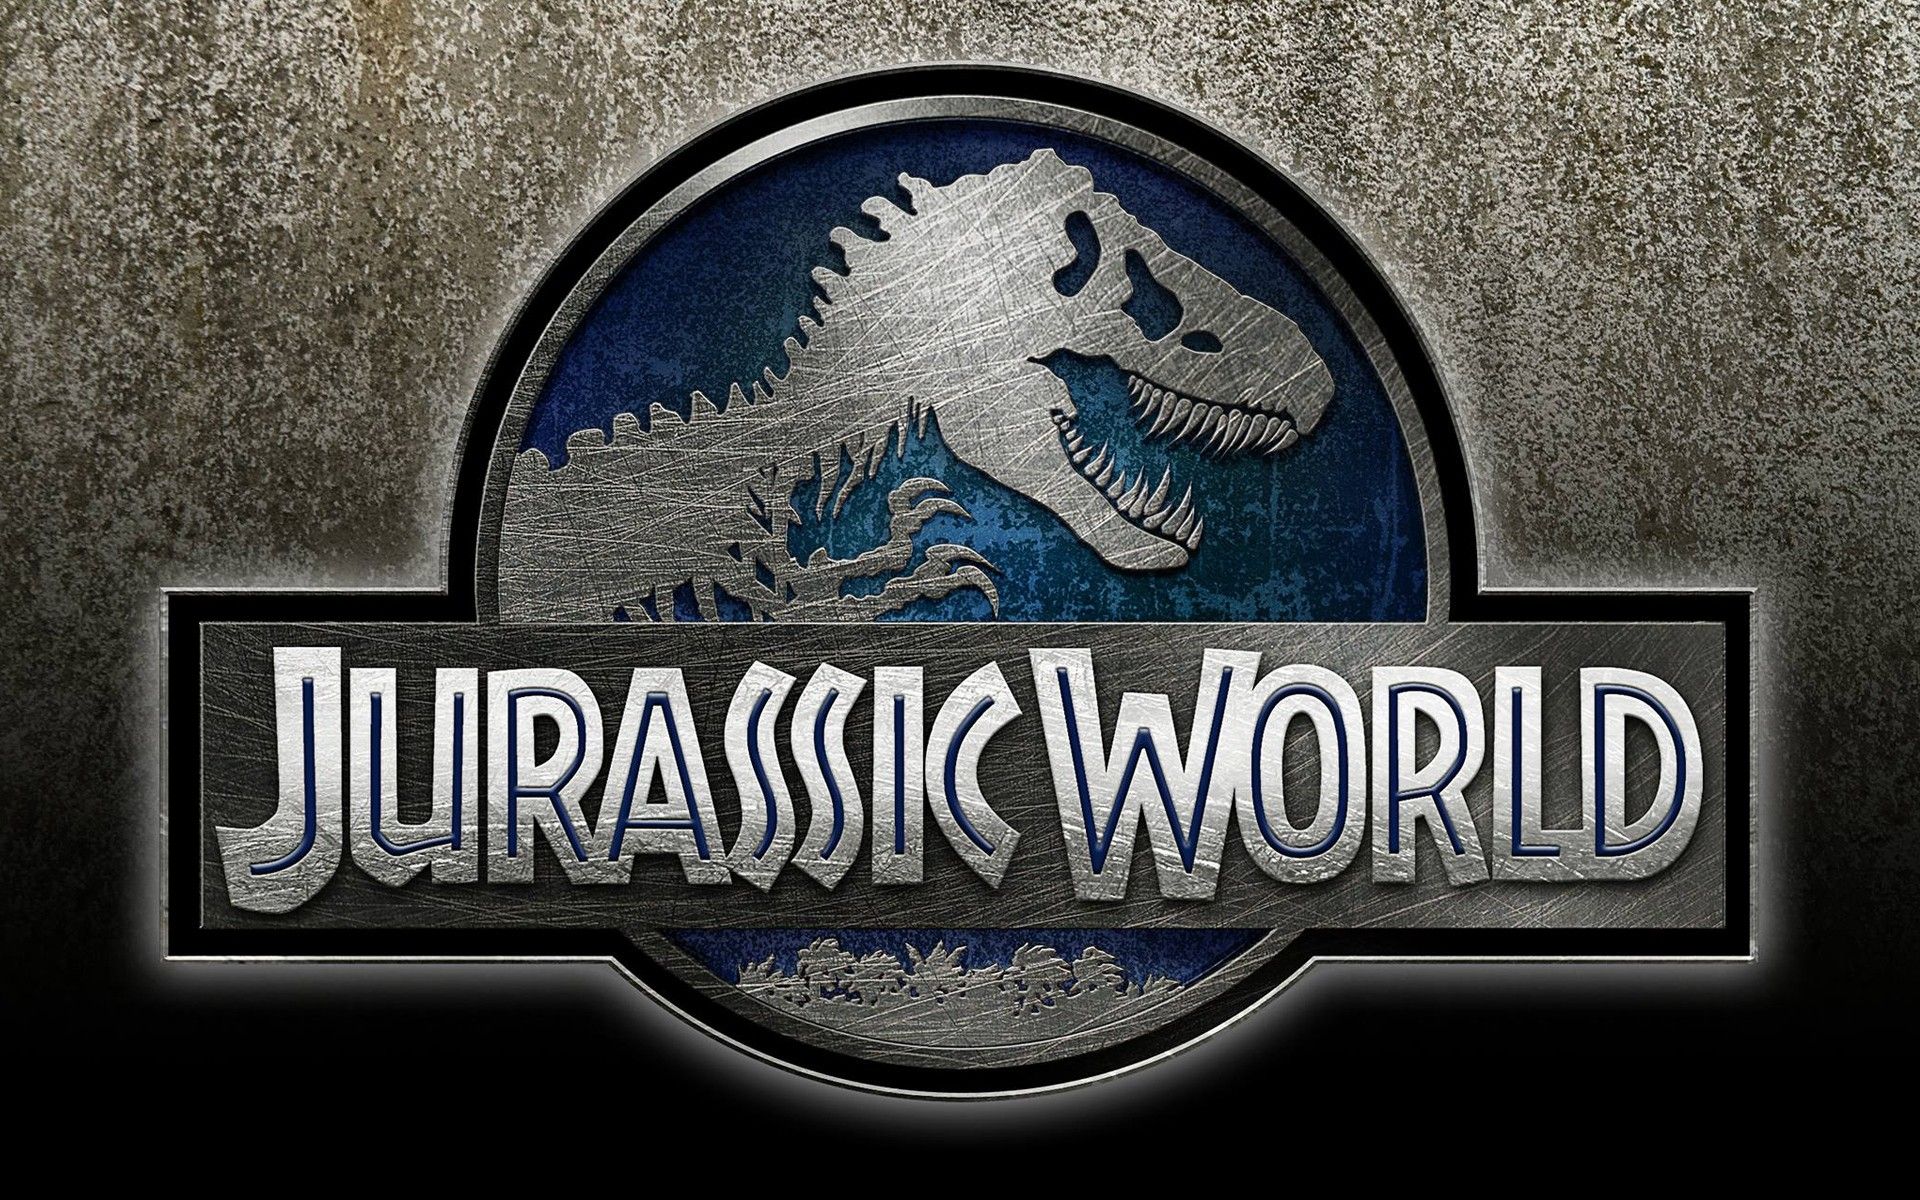 Jurassic World Desktop Background. Jurassic Park Dinosaur Wallpaper, Toy Story Jurassic Park Wallpaper and Jurassic Park Wallpaper